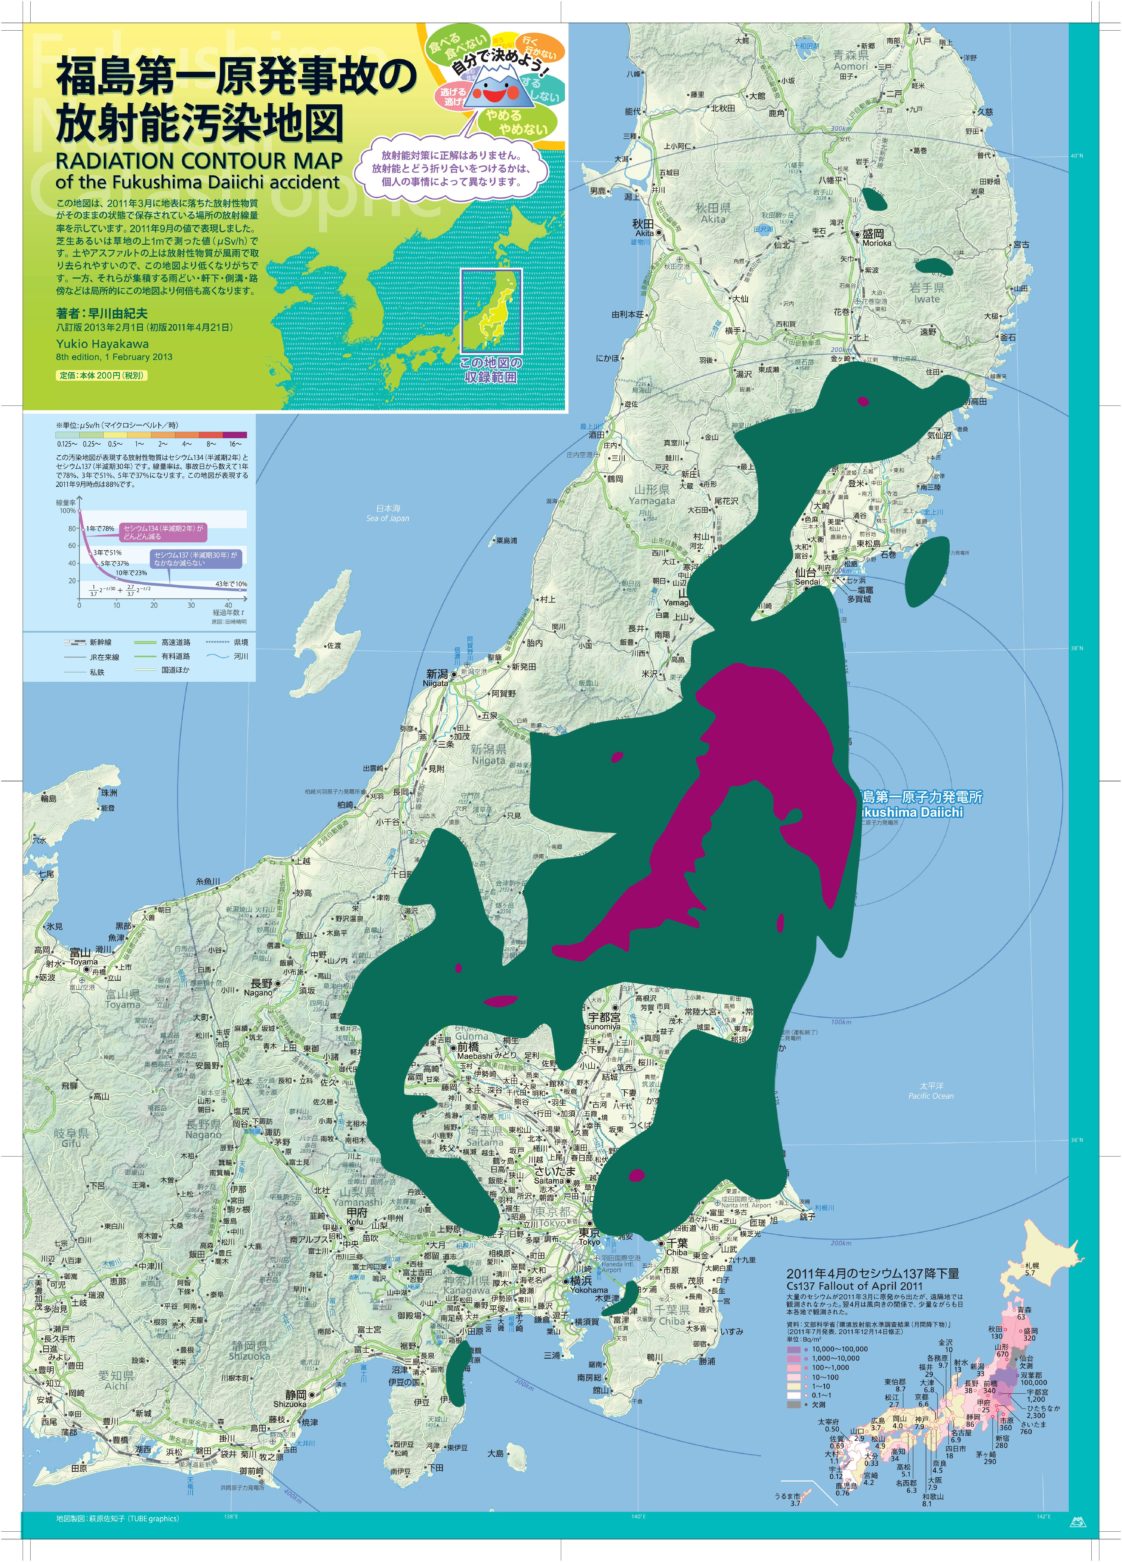 Map Fukushima Radiation Contour Map Infographic.tv Number one